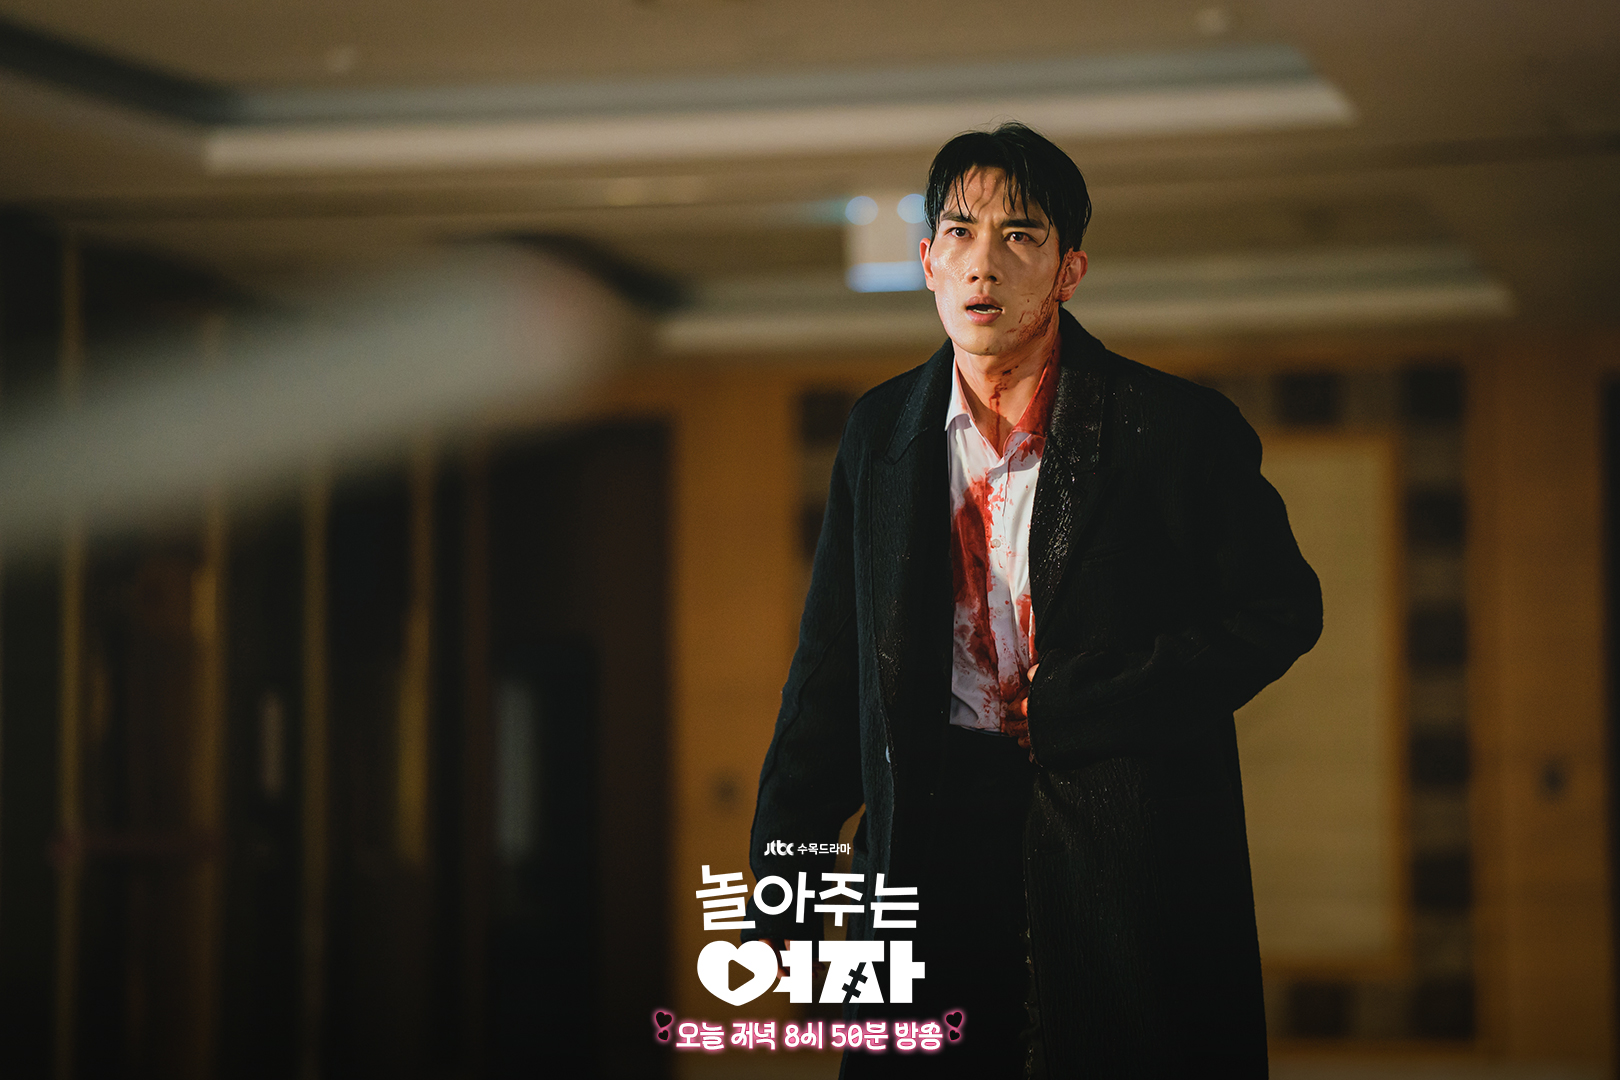 Kwon Yool Sternly Warns Han Sun Hwa About Um Tae Goo In 